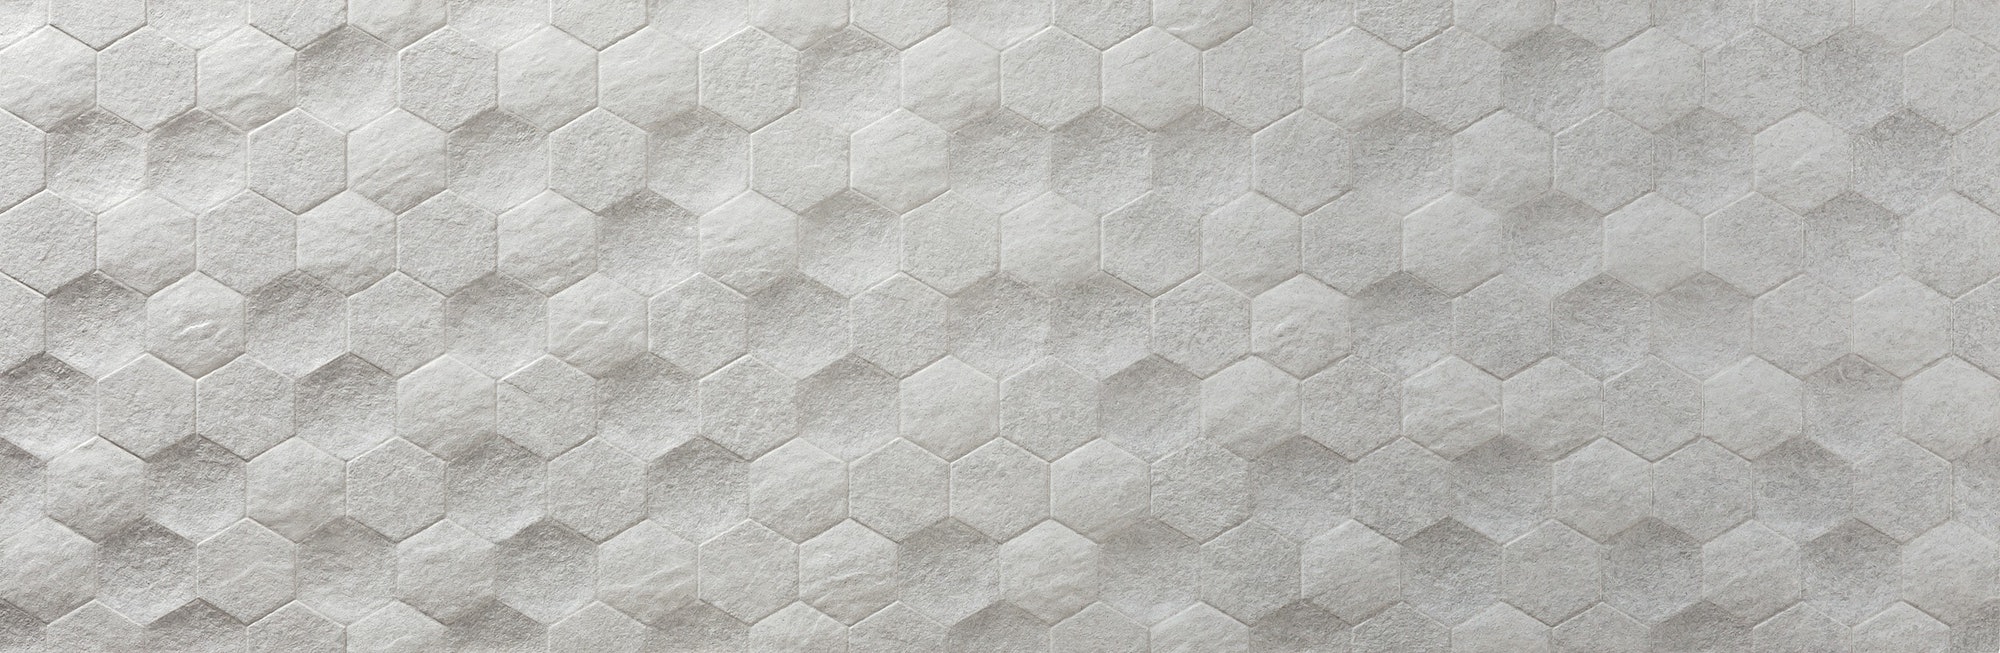 Bliss Perla Hexagonal Decor Wall Tile